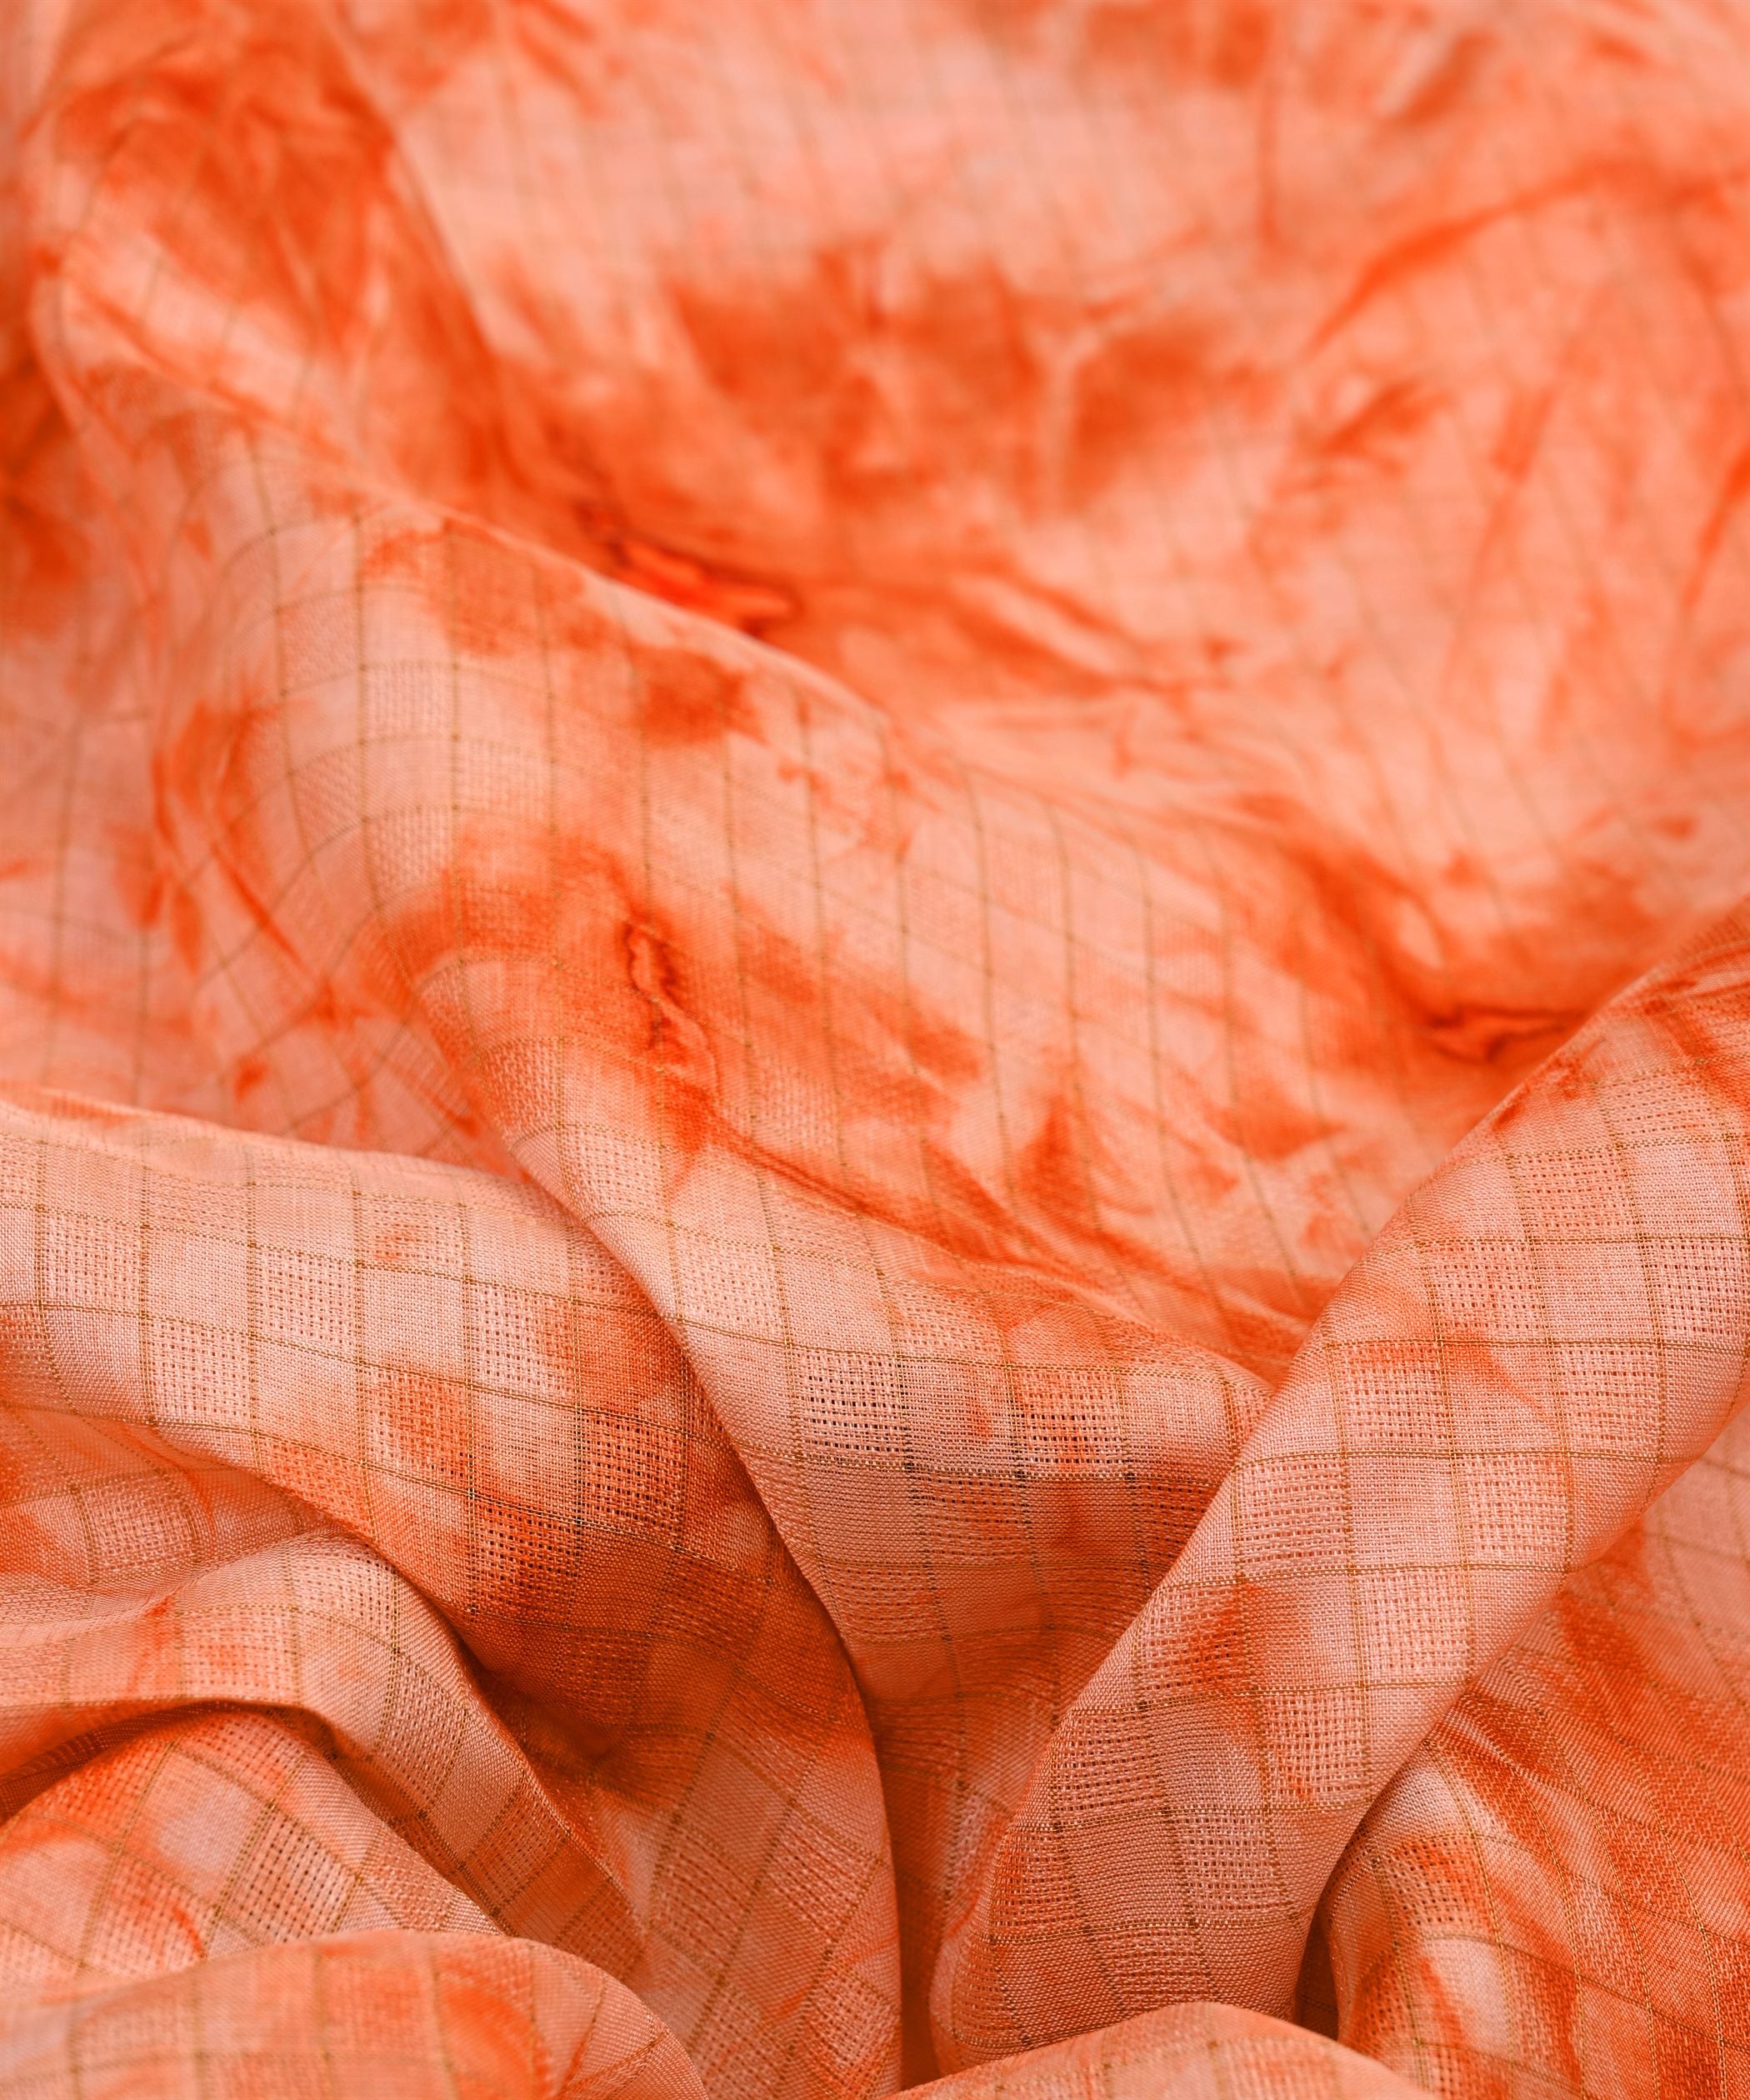 Coral Jute Fabric with Checks and Shibori Print